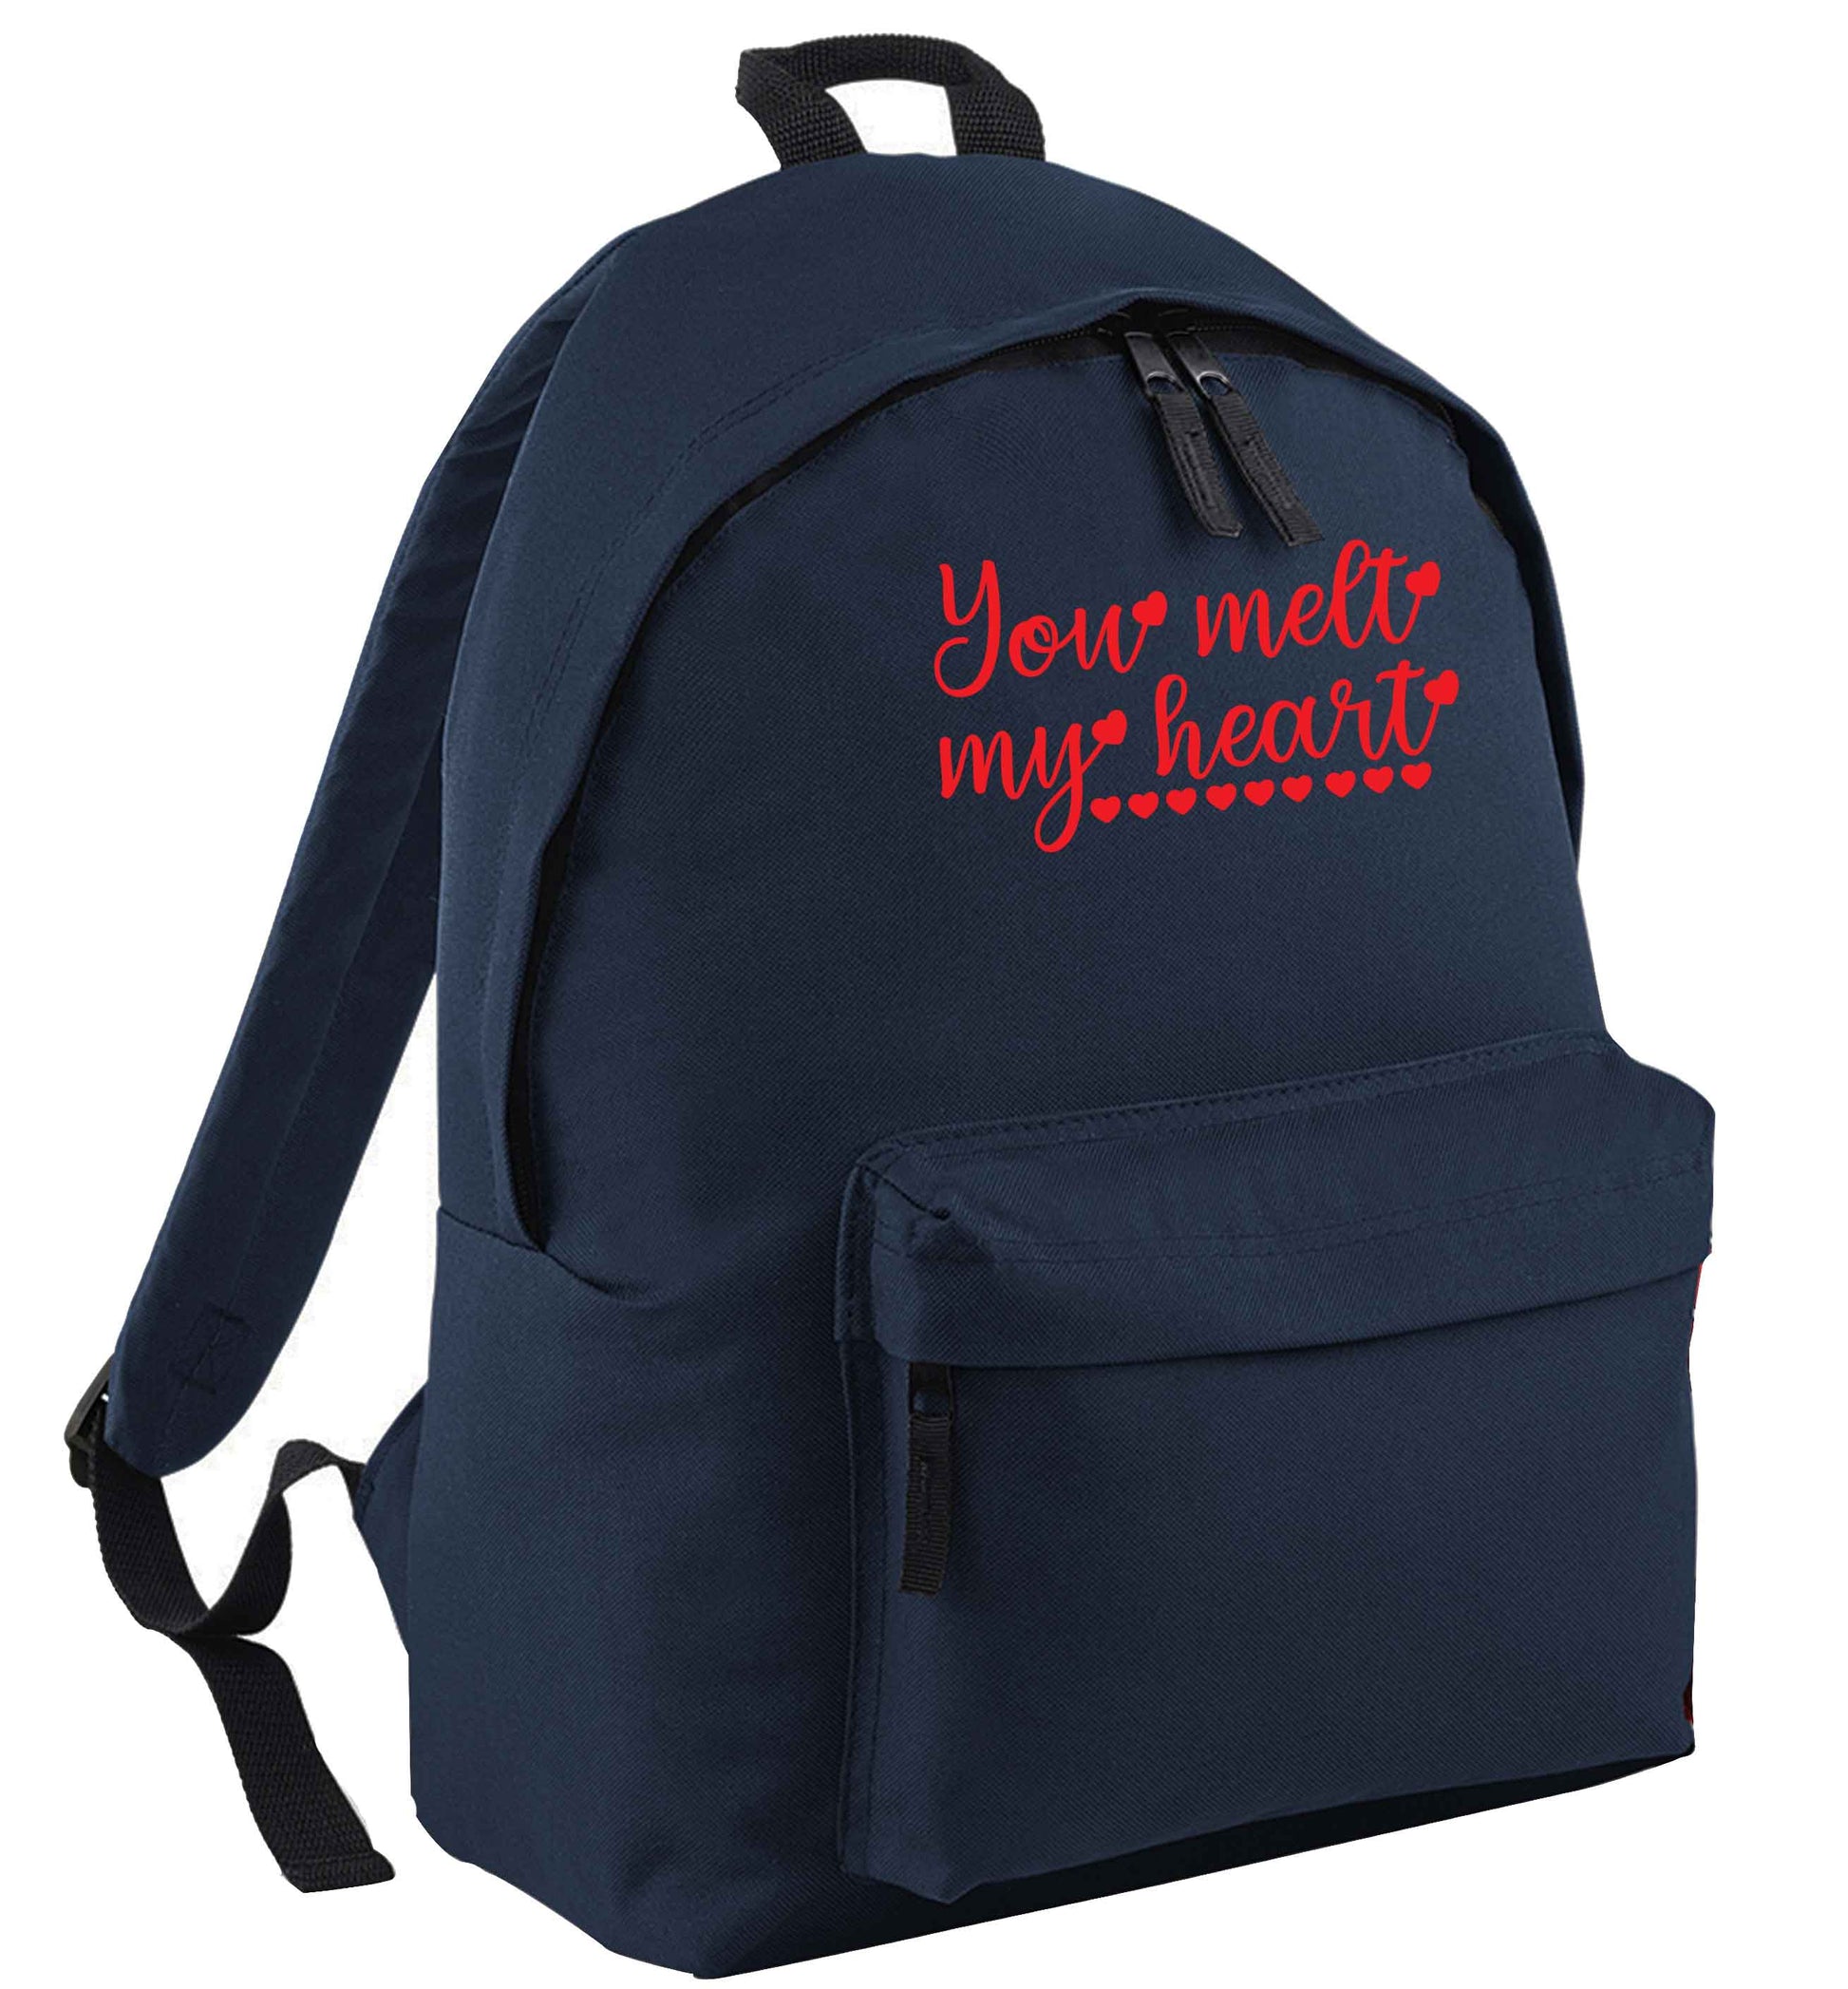 You melt my heart | Children's backpack